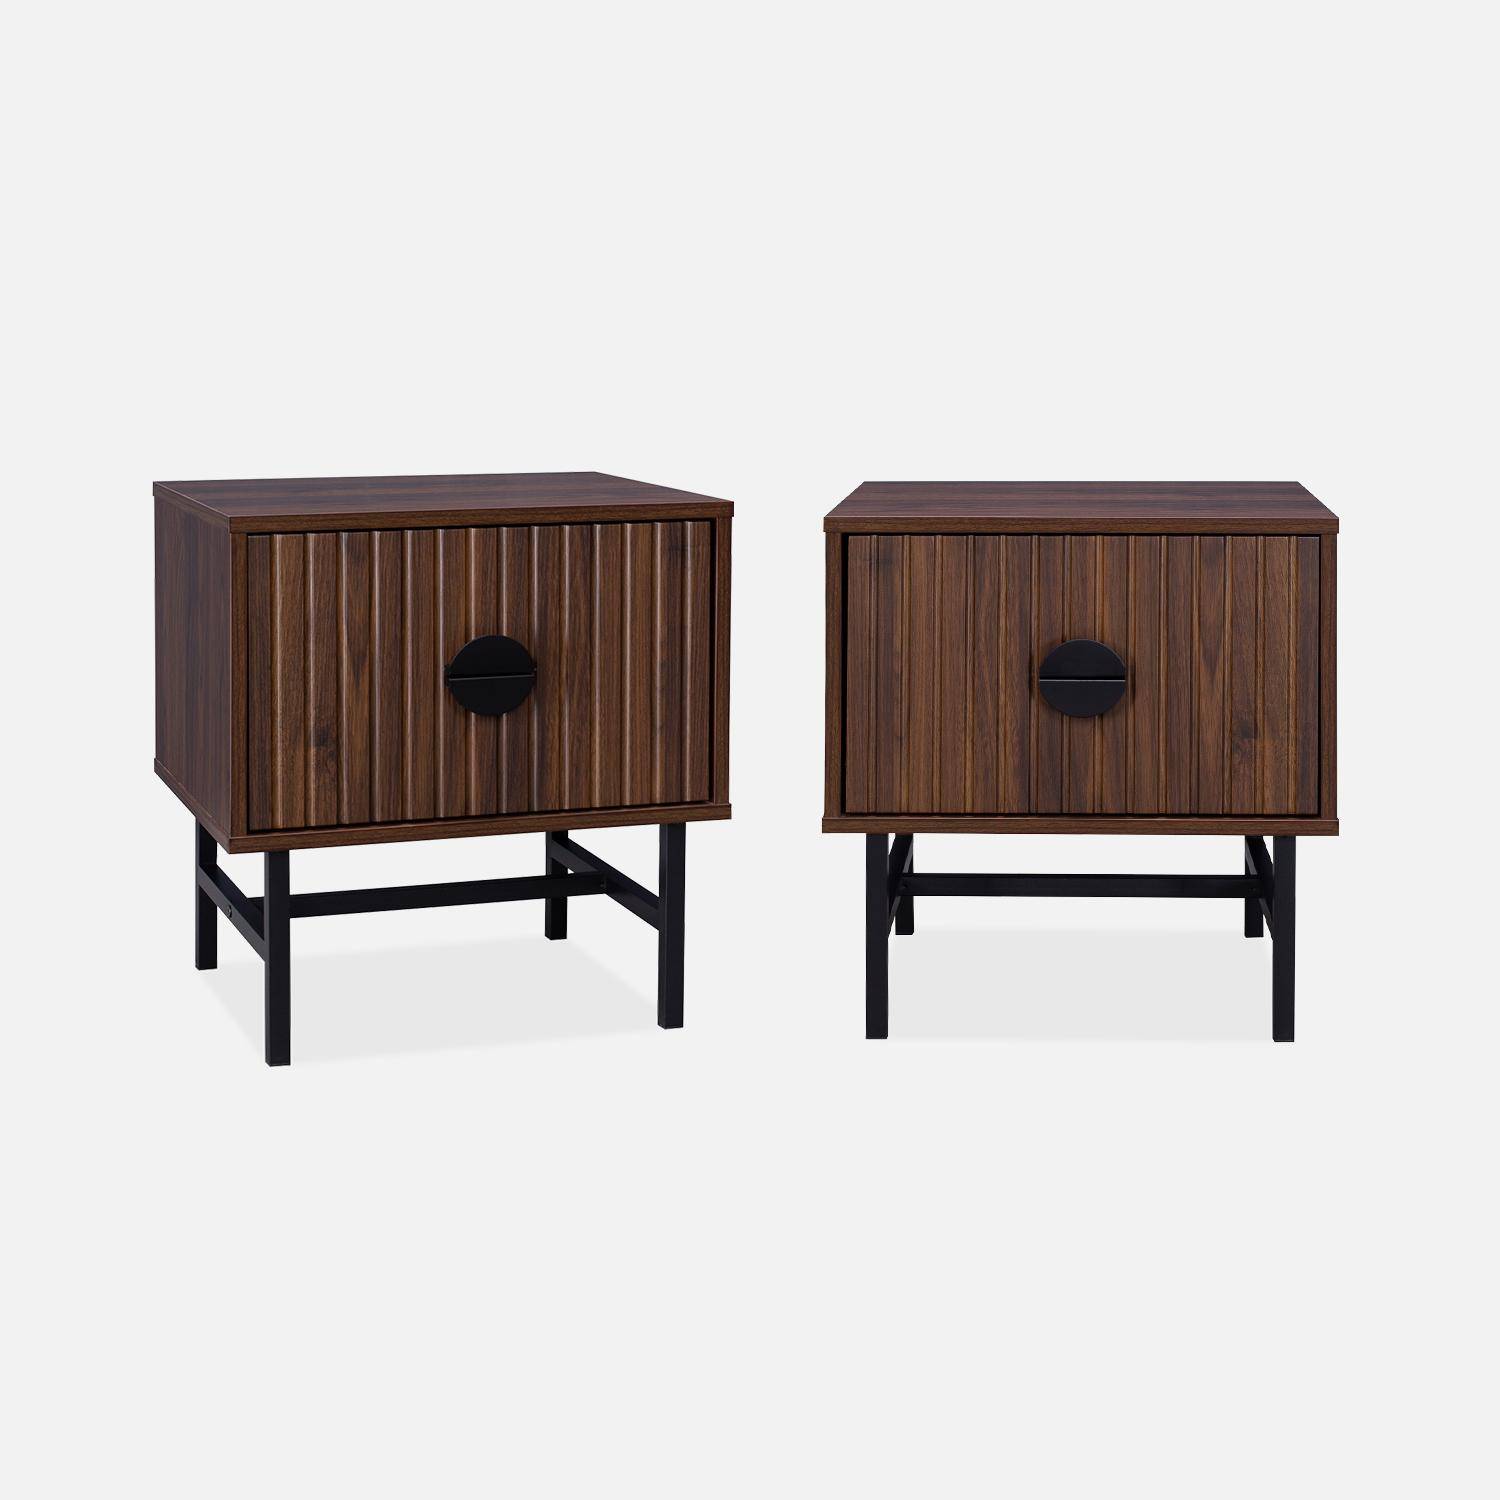 Set of 2 dark wood effect bedside tables, one drawer, L 48 x W 39 x H 50cm Photo5